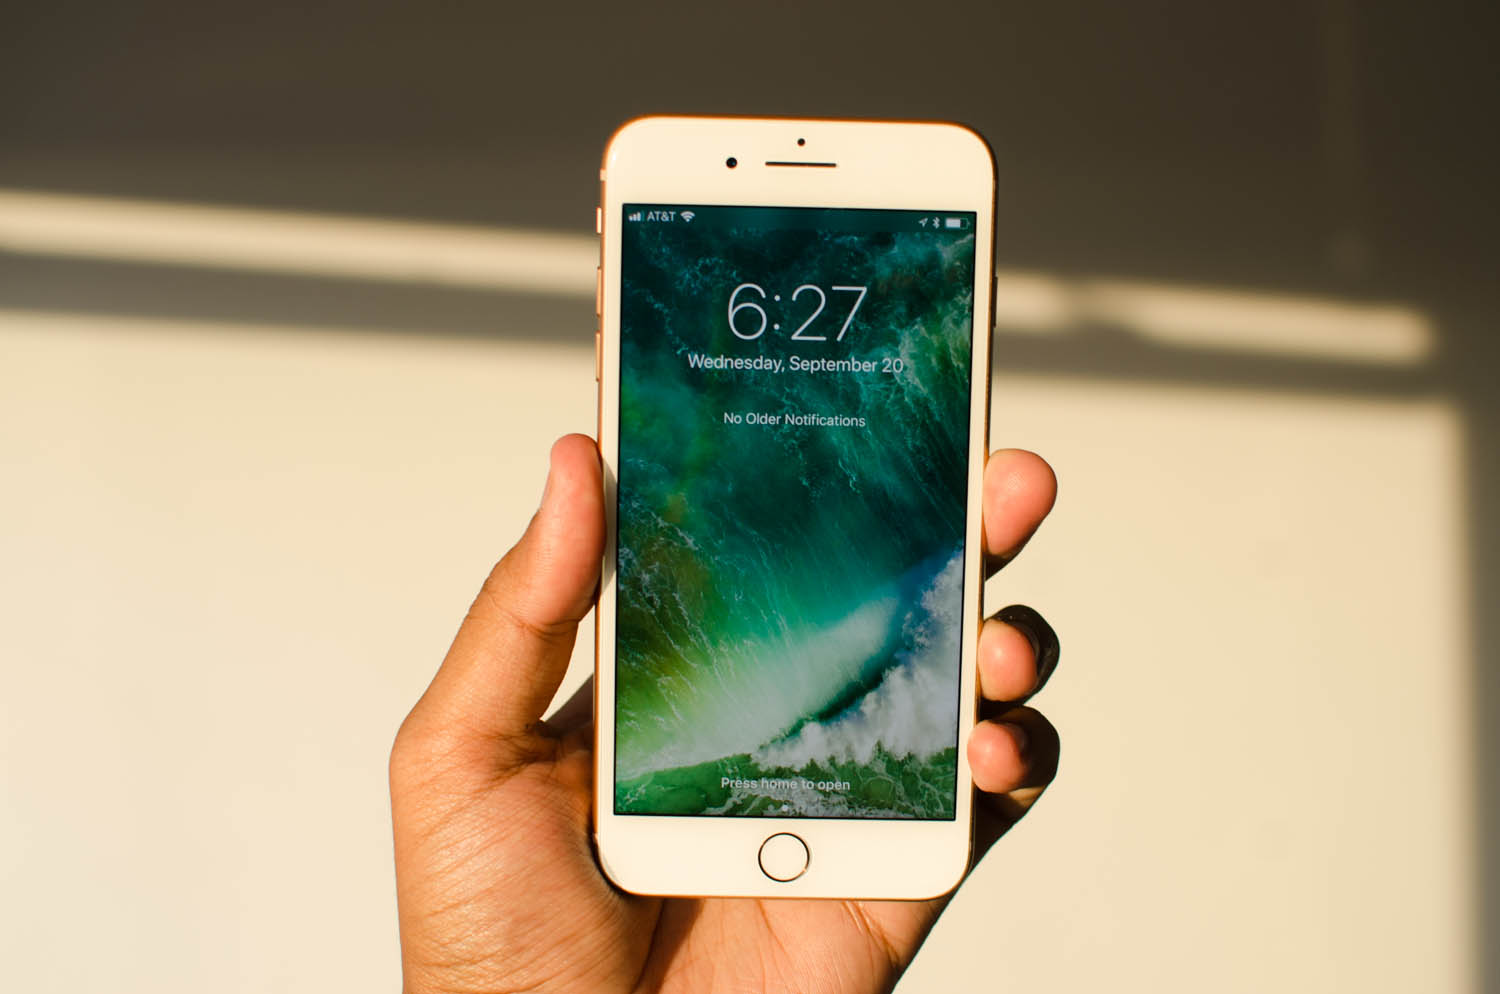 Olixar iPhone 8 Edge to Edge Tempered Glass Screen Protector - White